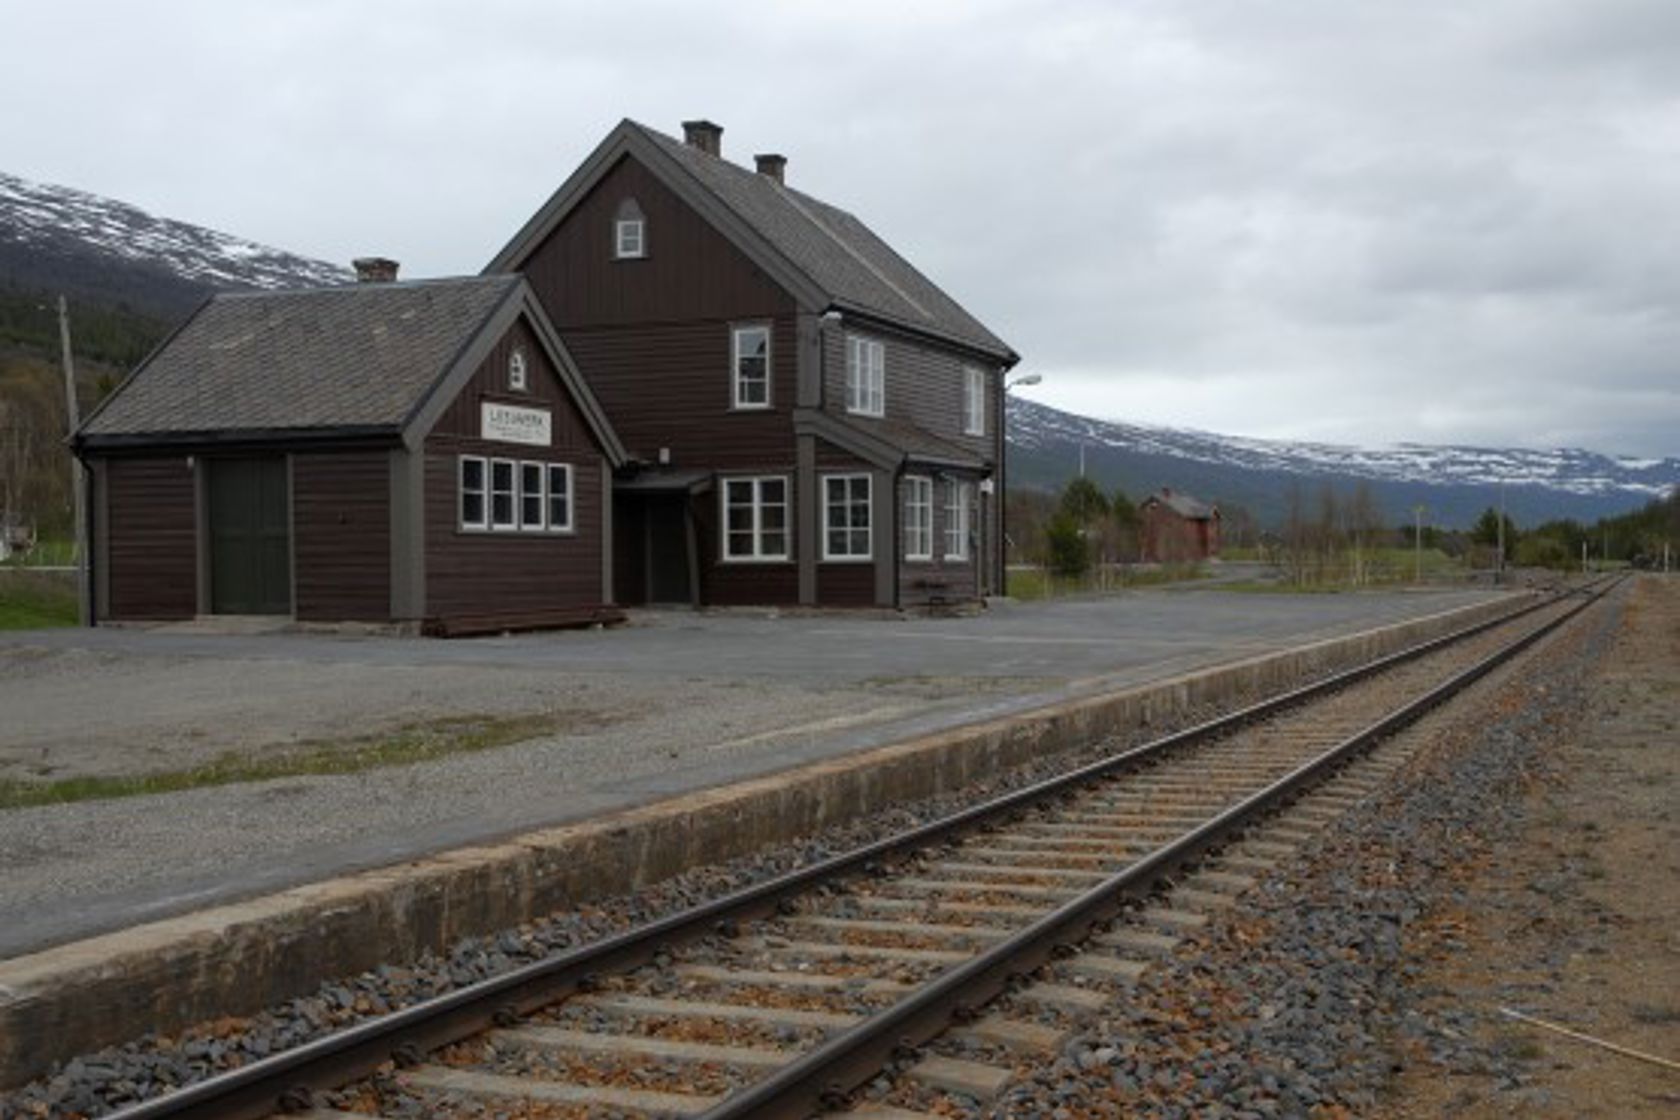 Exterior view of Lesjaverk station